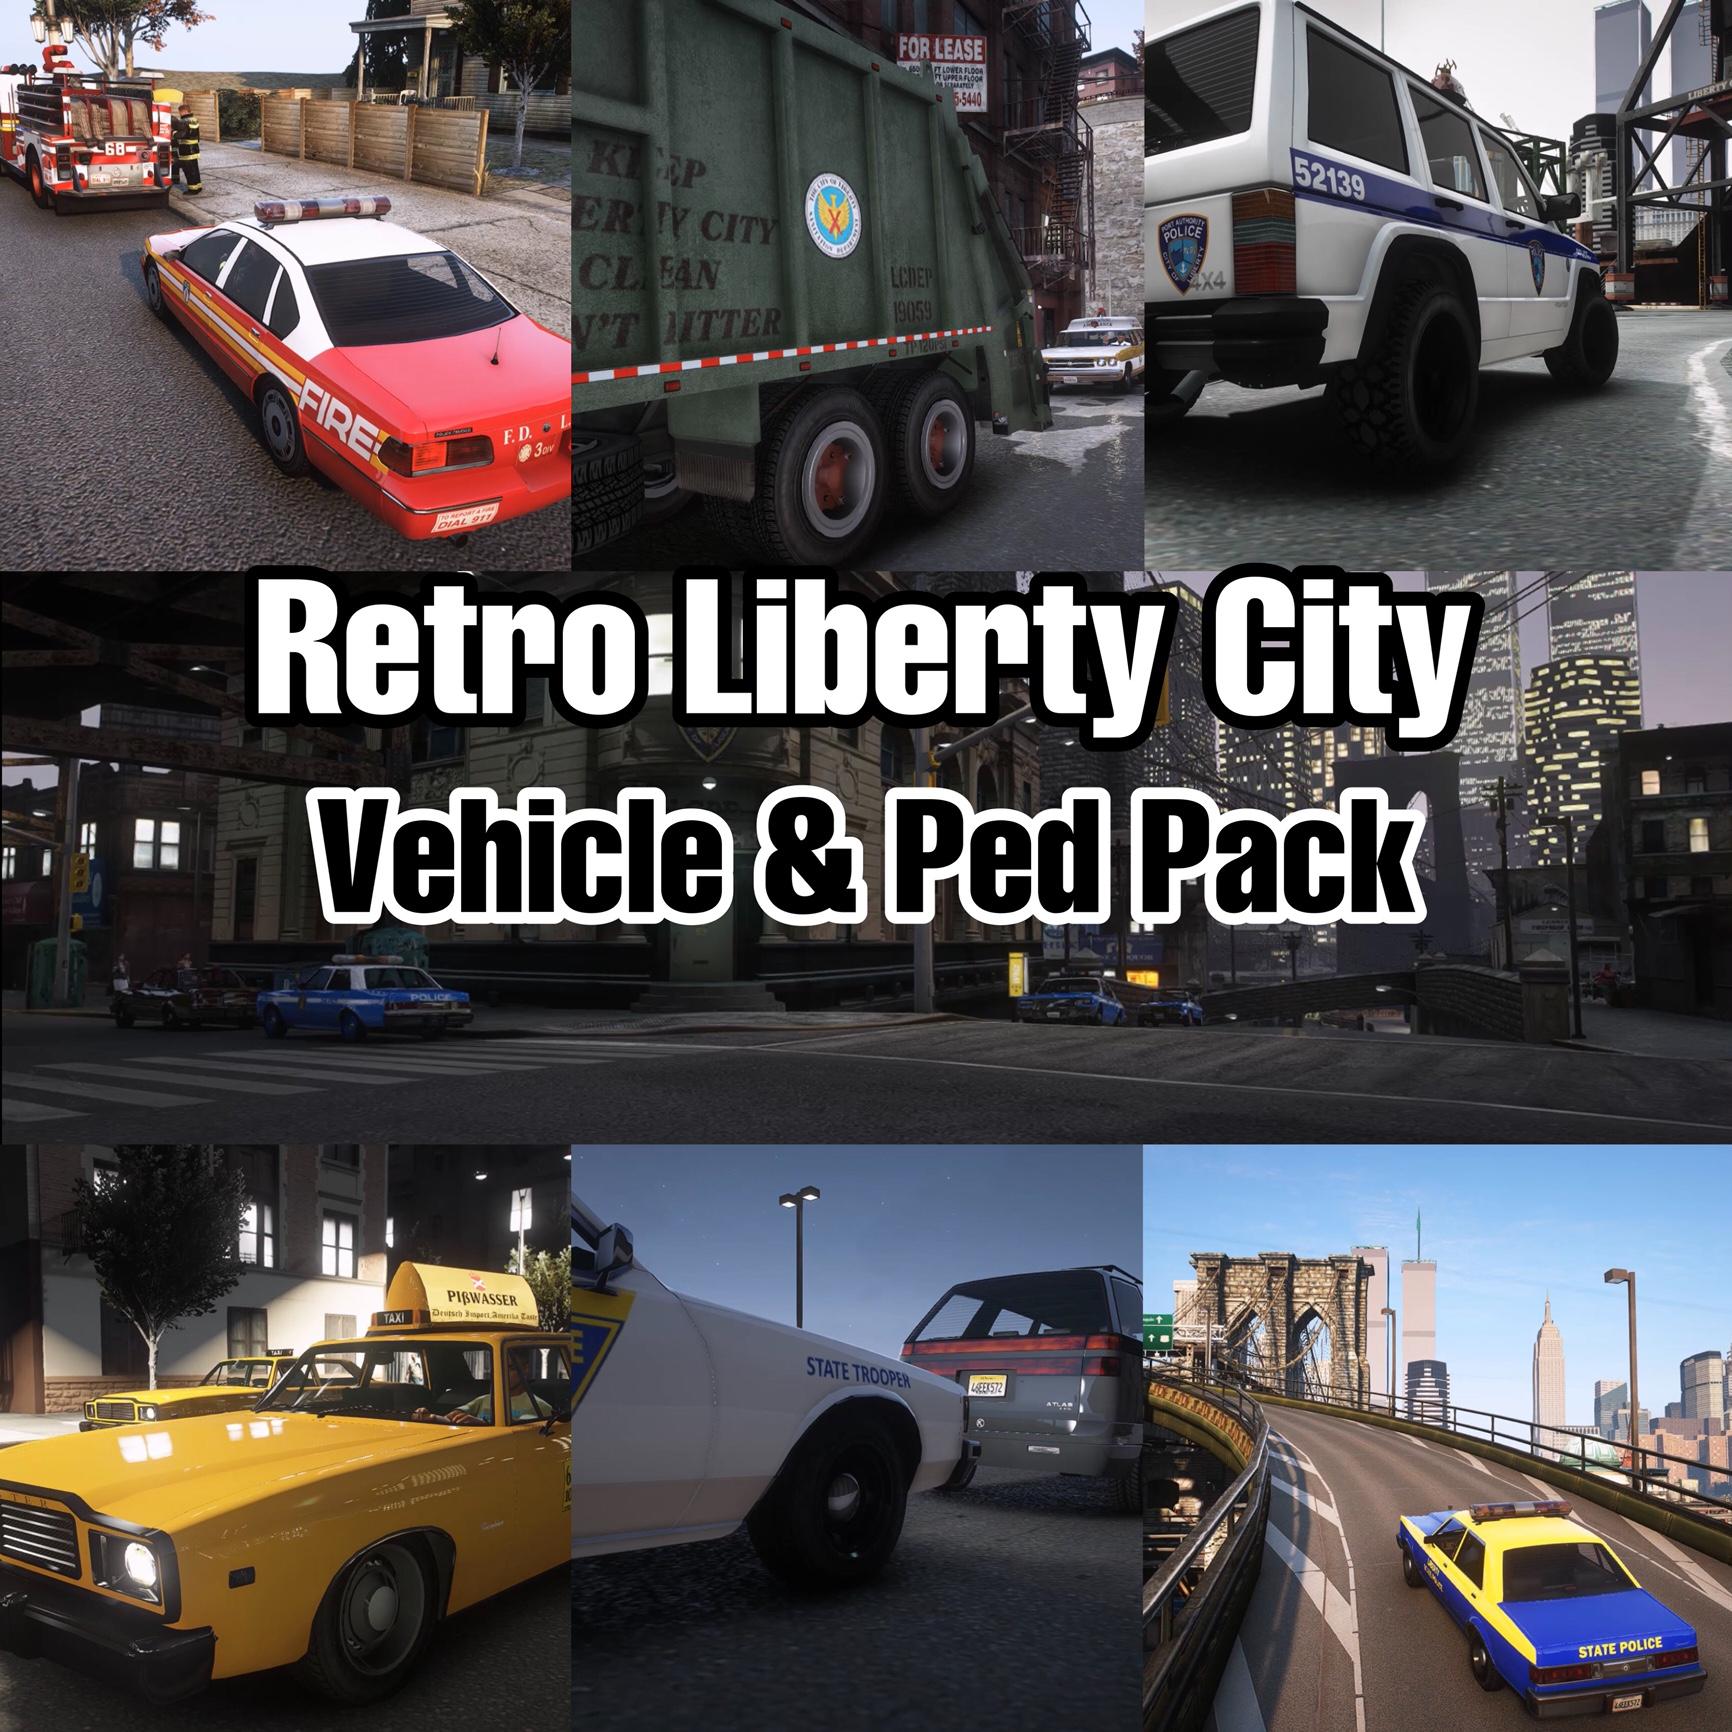 GTA Re: LCS Beta 4.0 Build May 2019 file - GTA Re: Liberty City